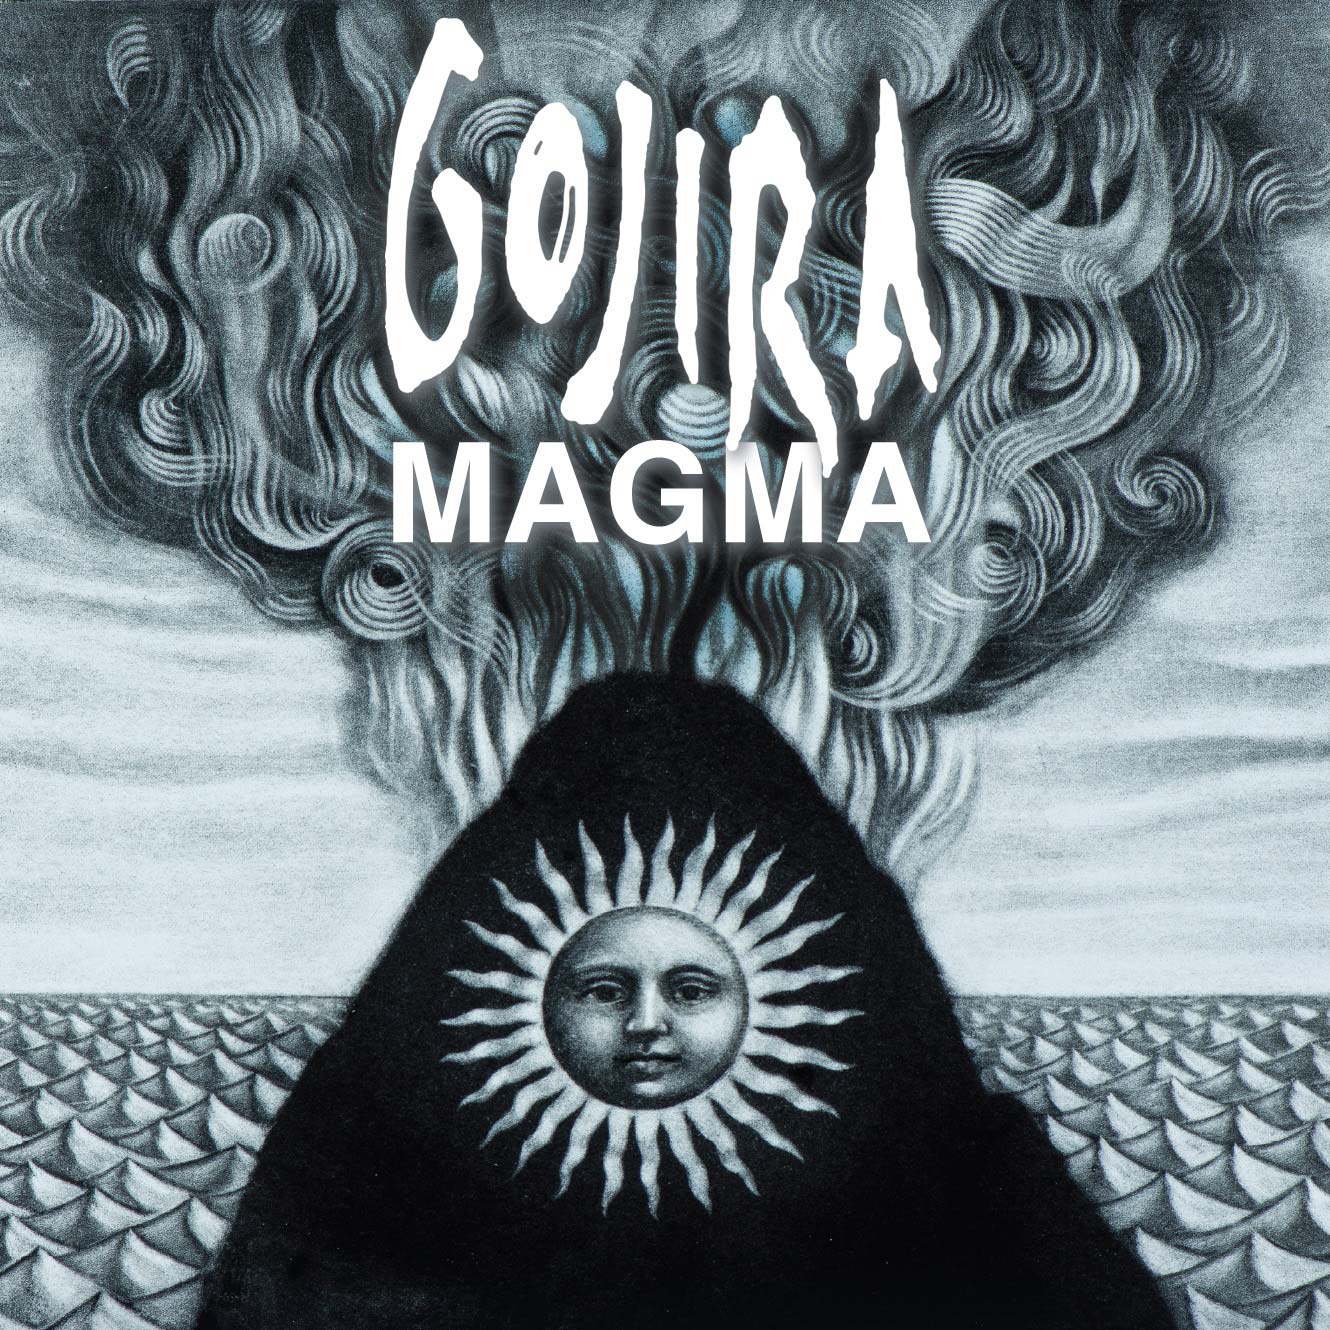 gojira magma